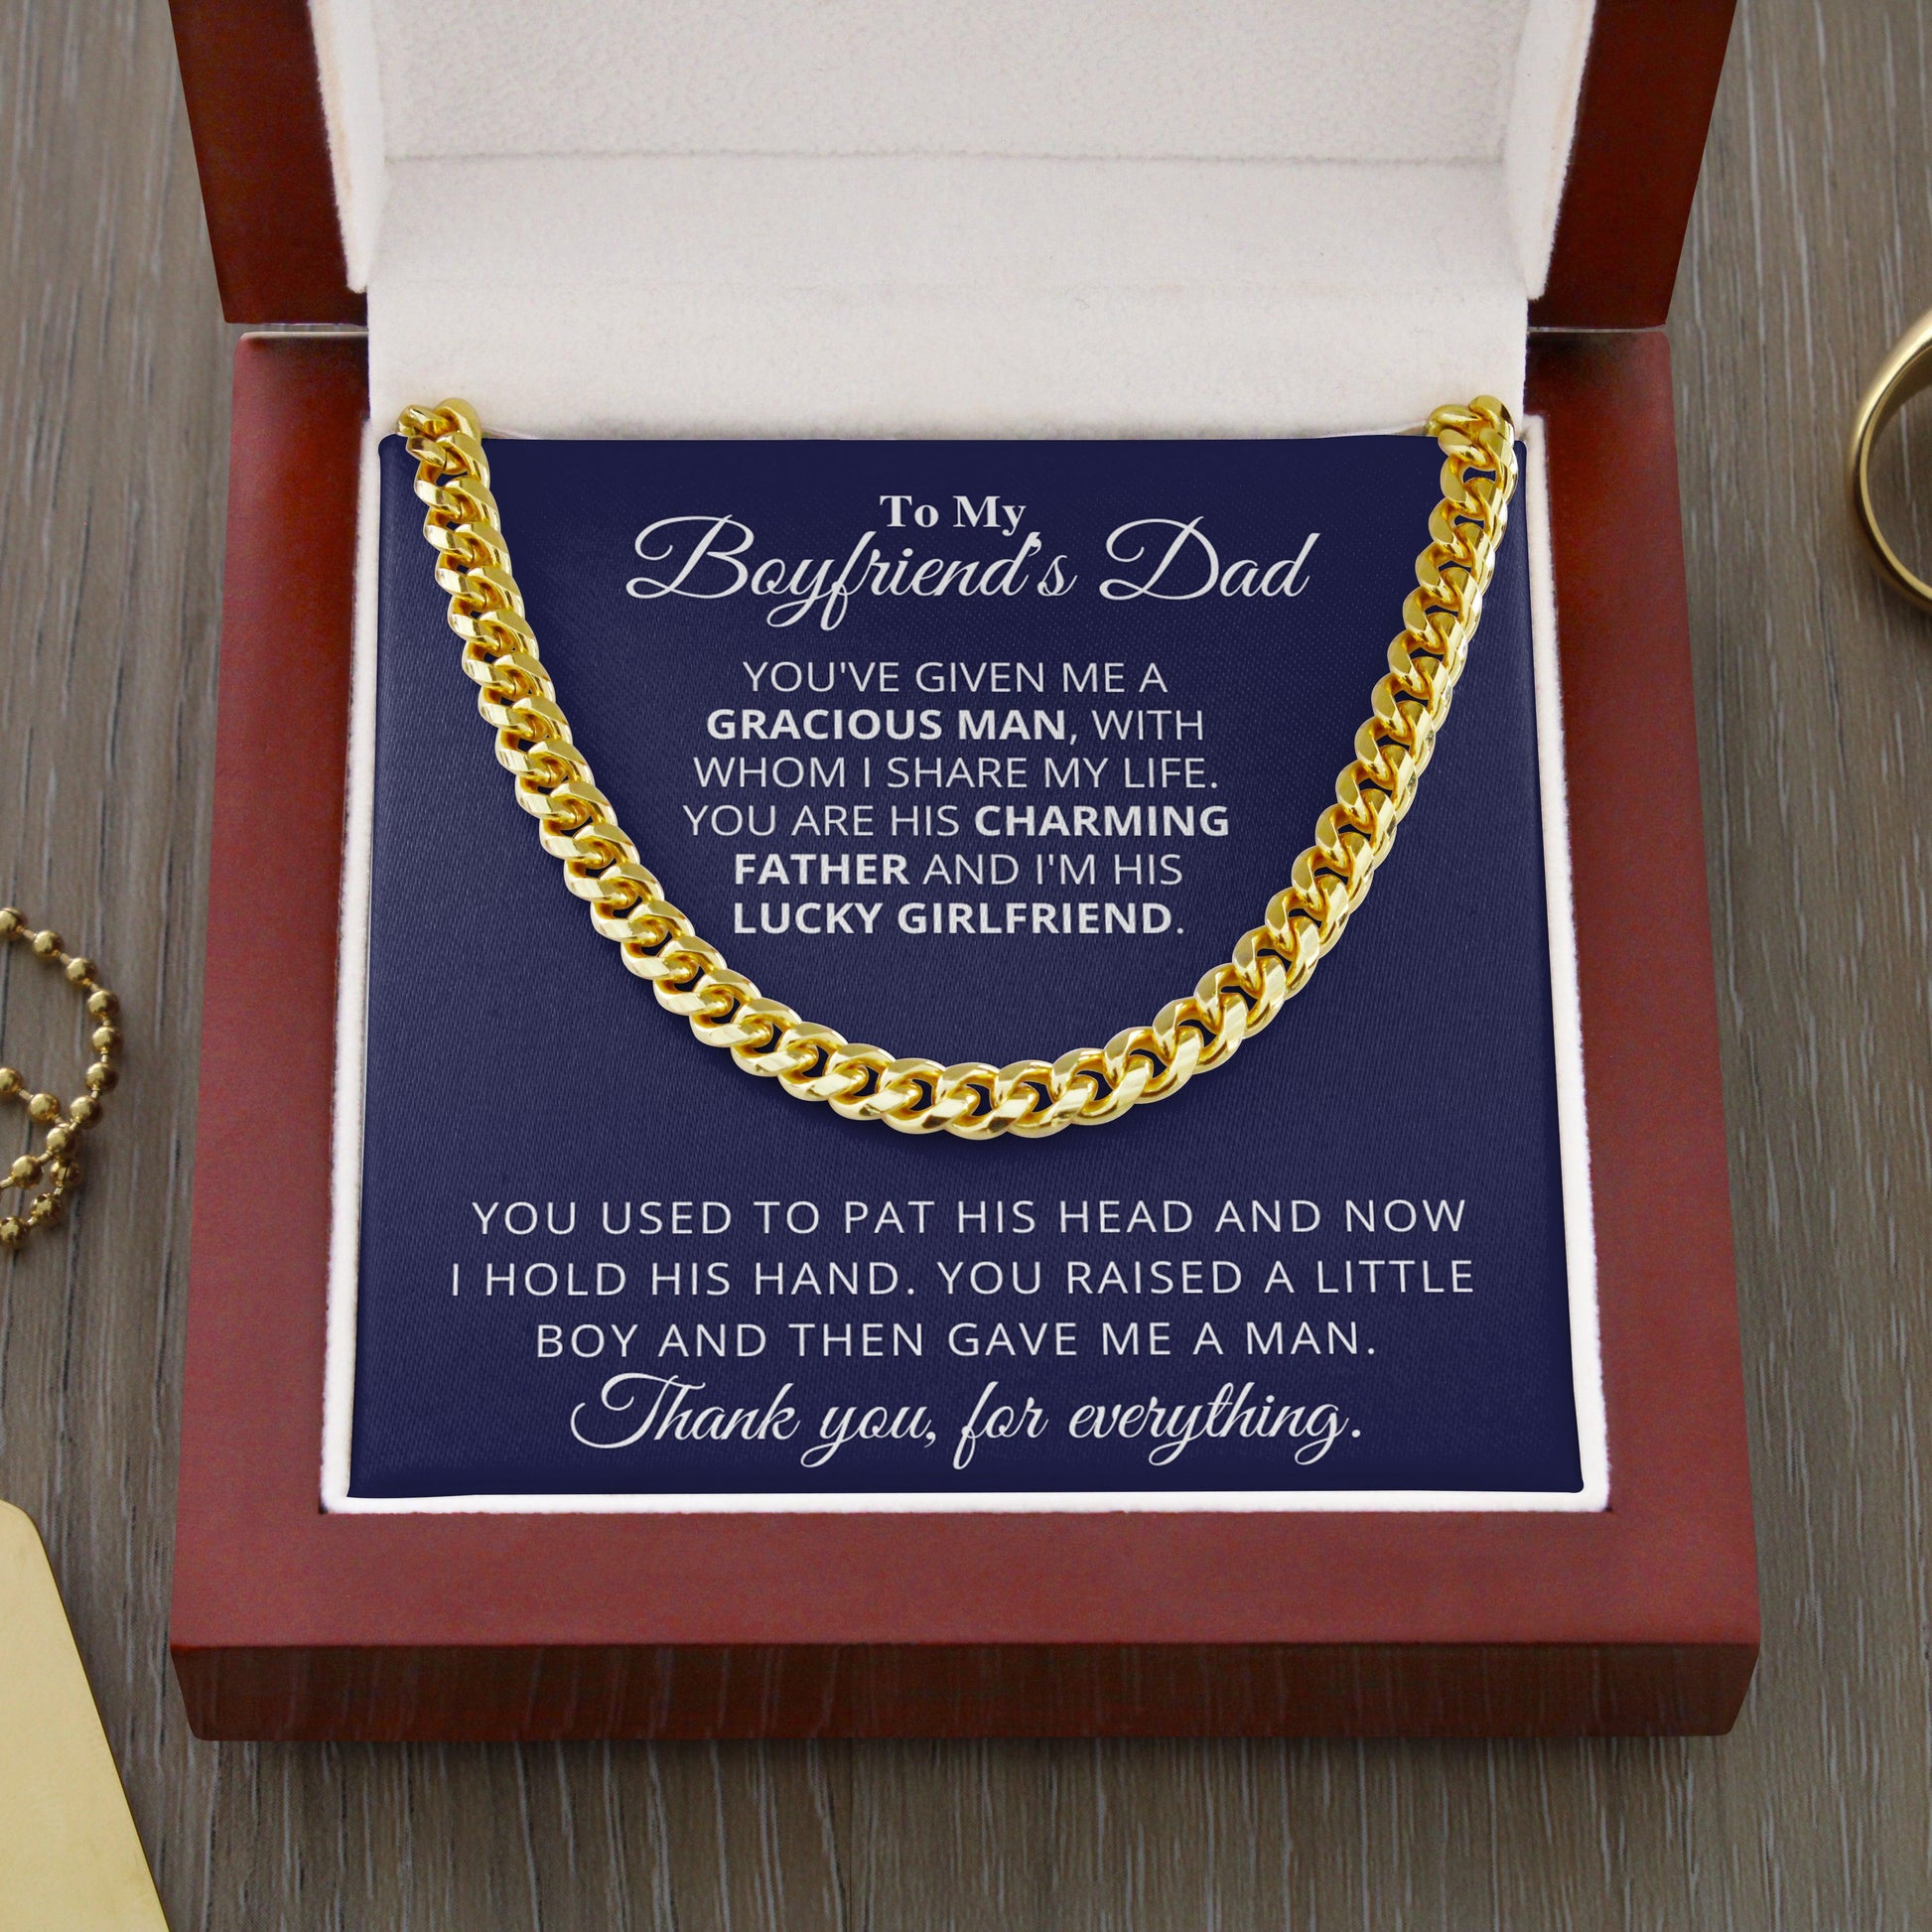 Jewelry gifts Boyfriend's Dad - Gracious Man - Cuban Link Chain - Belesmé - Memorable Jewelry Gifts 